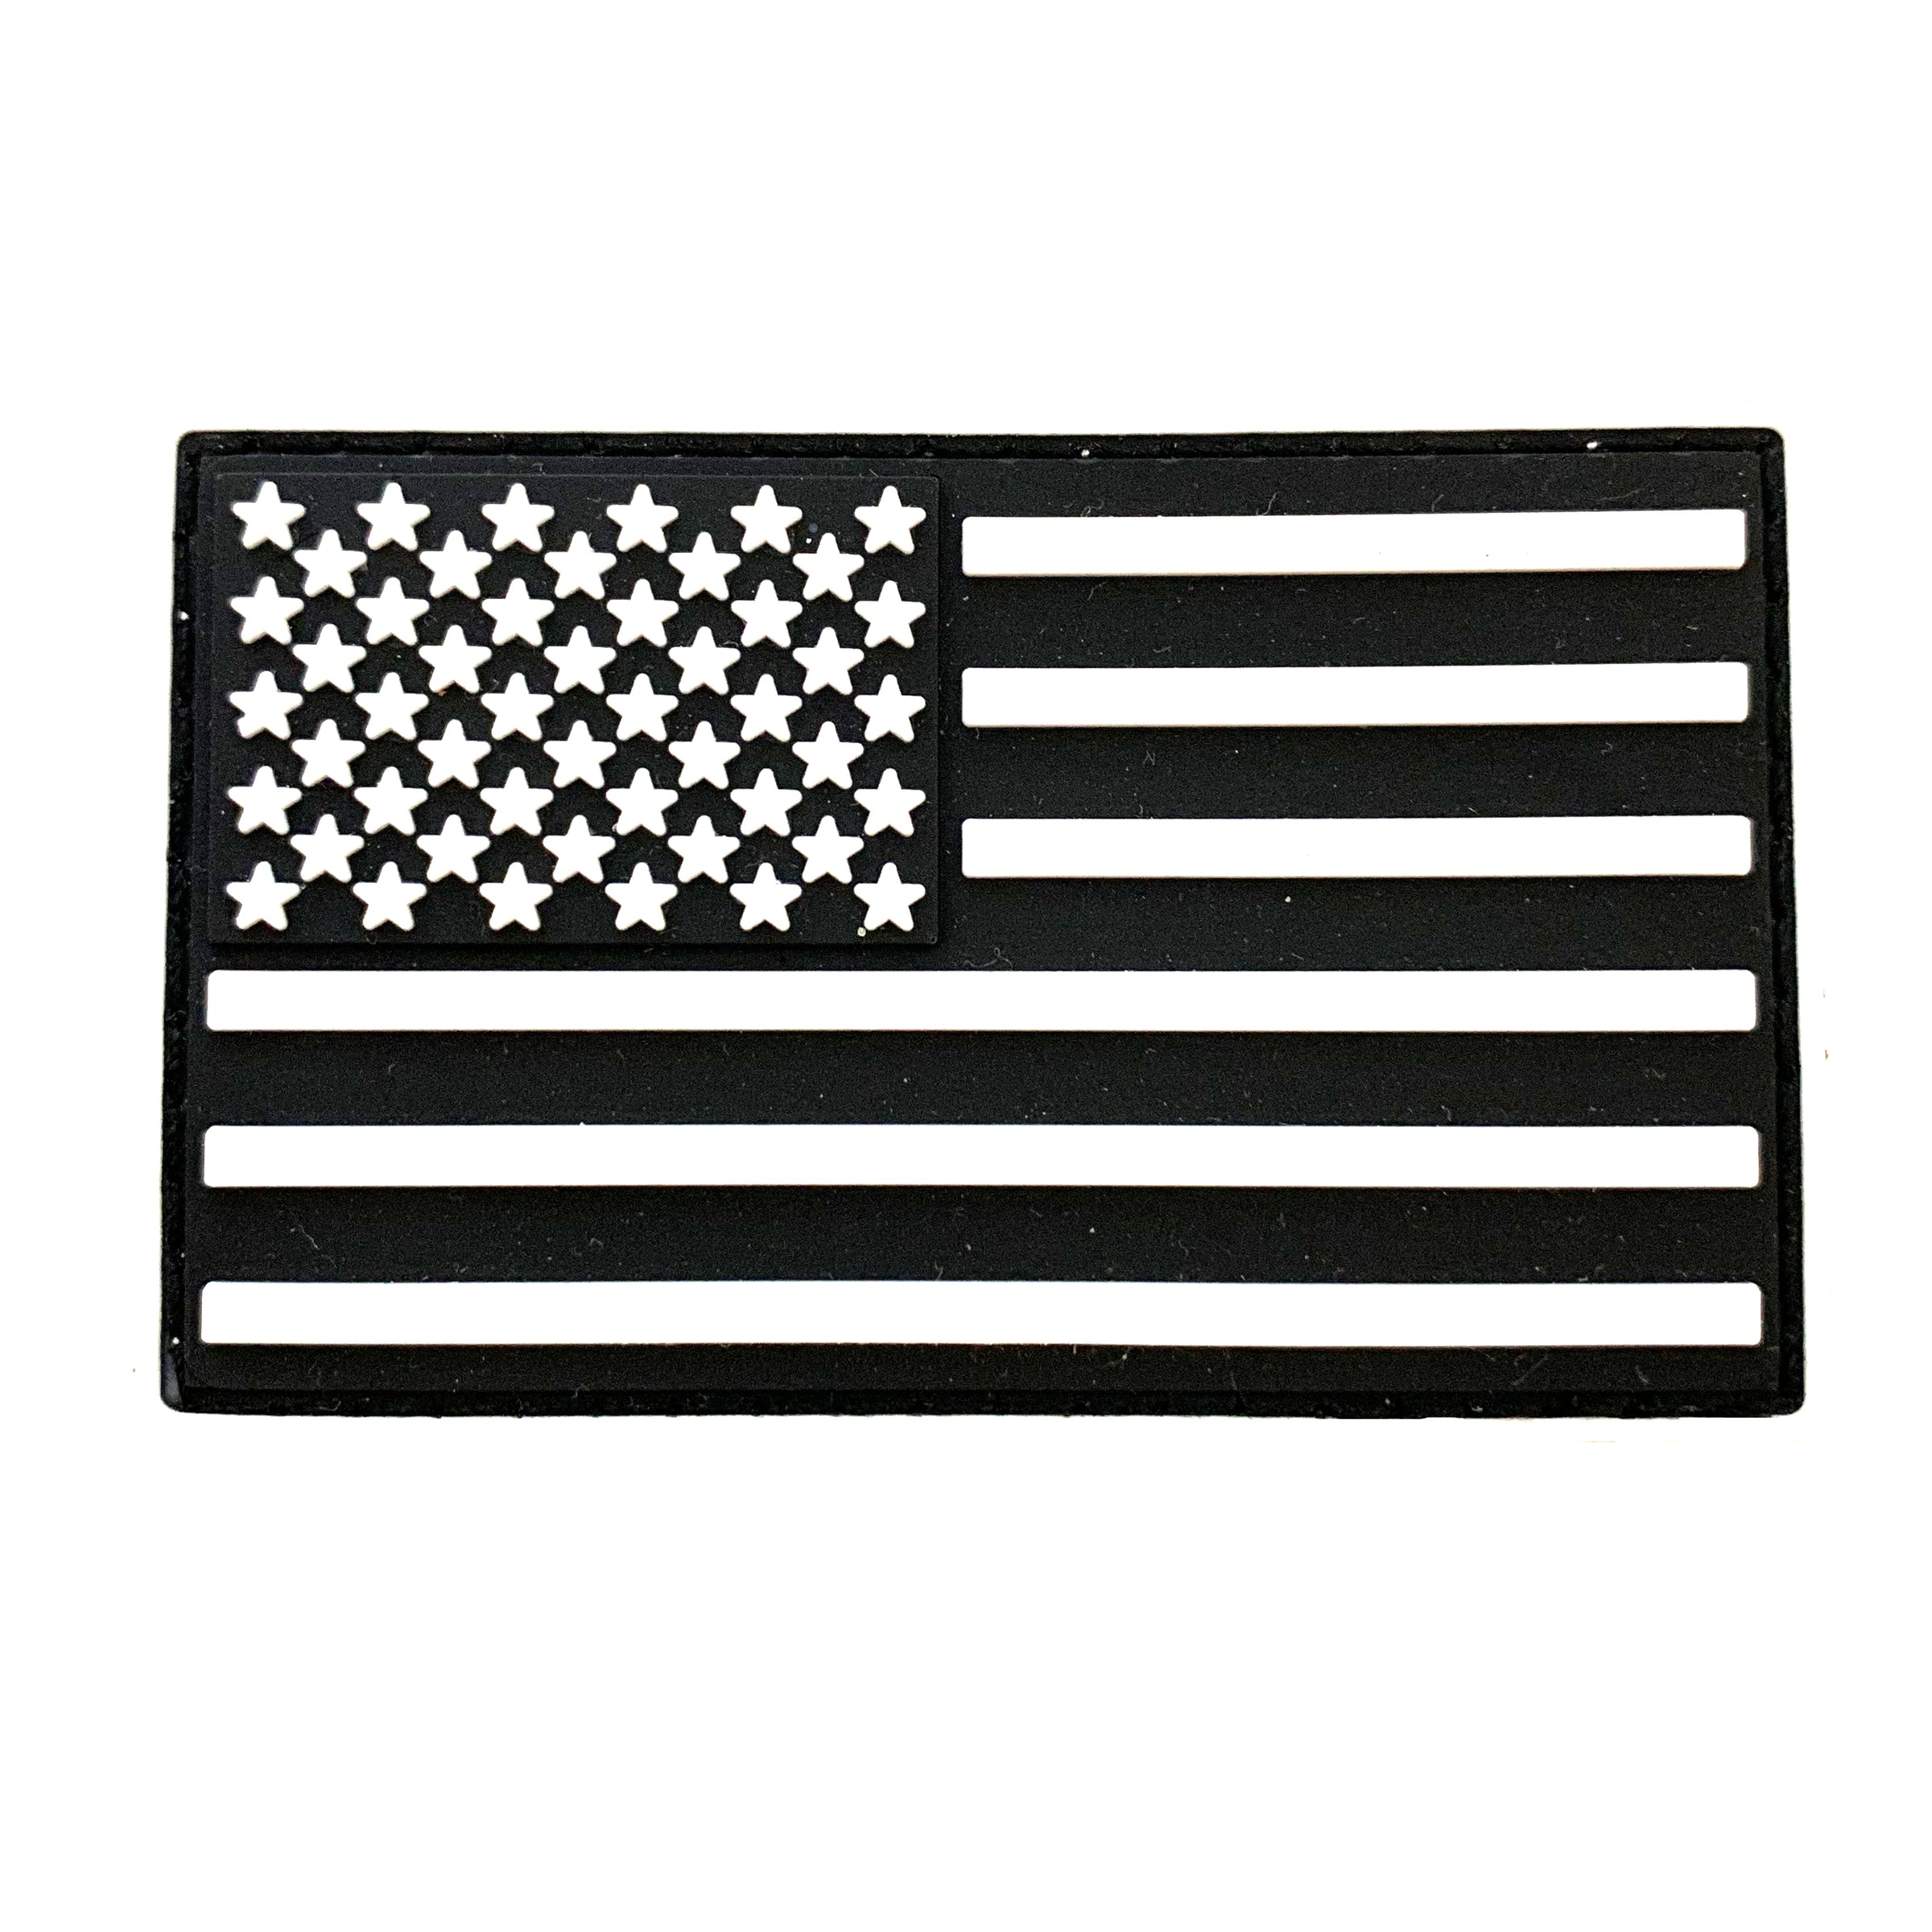 USA Flag Velcro Patch